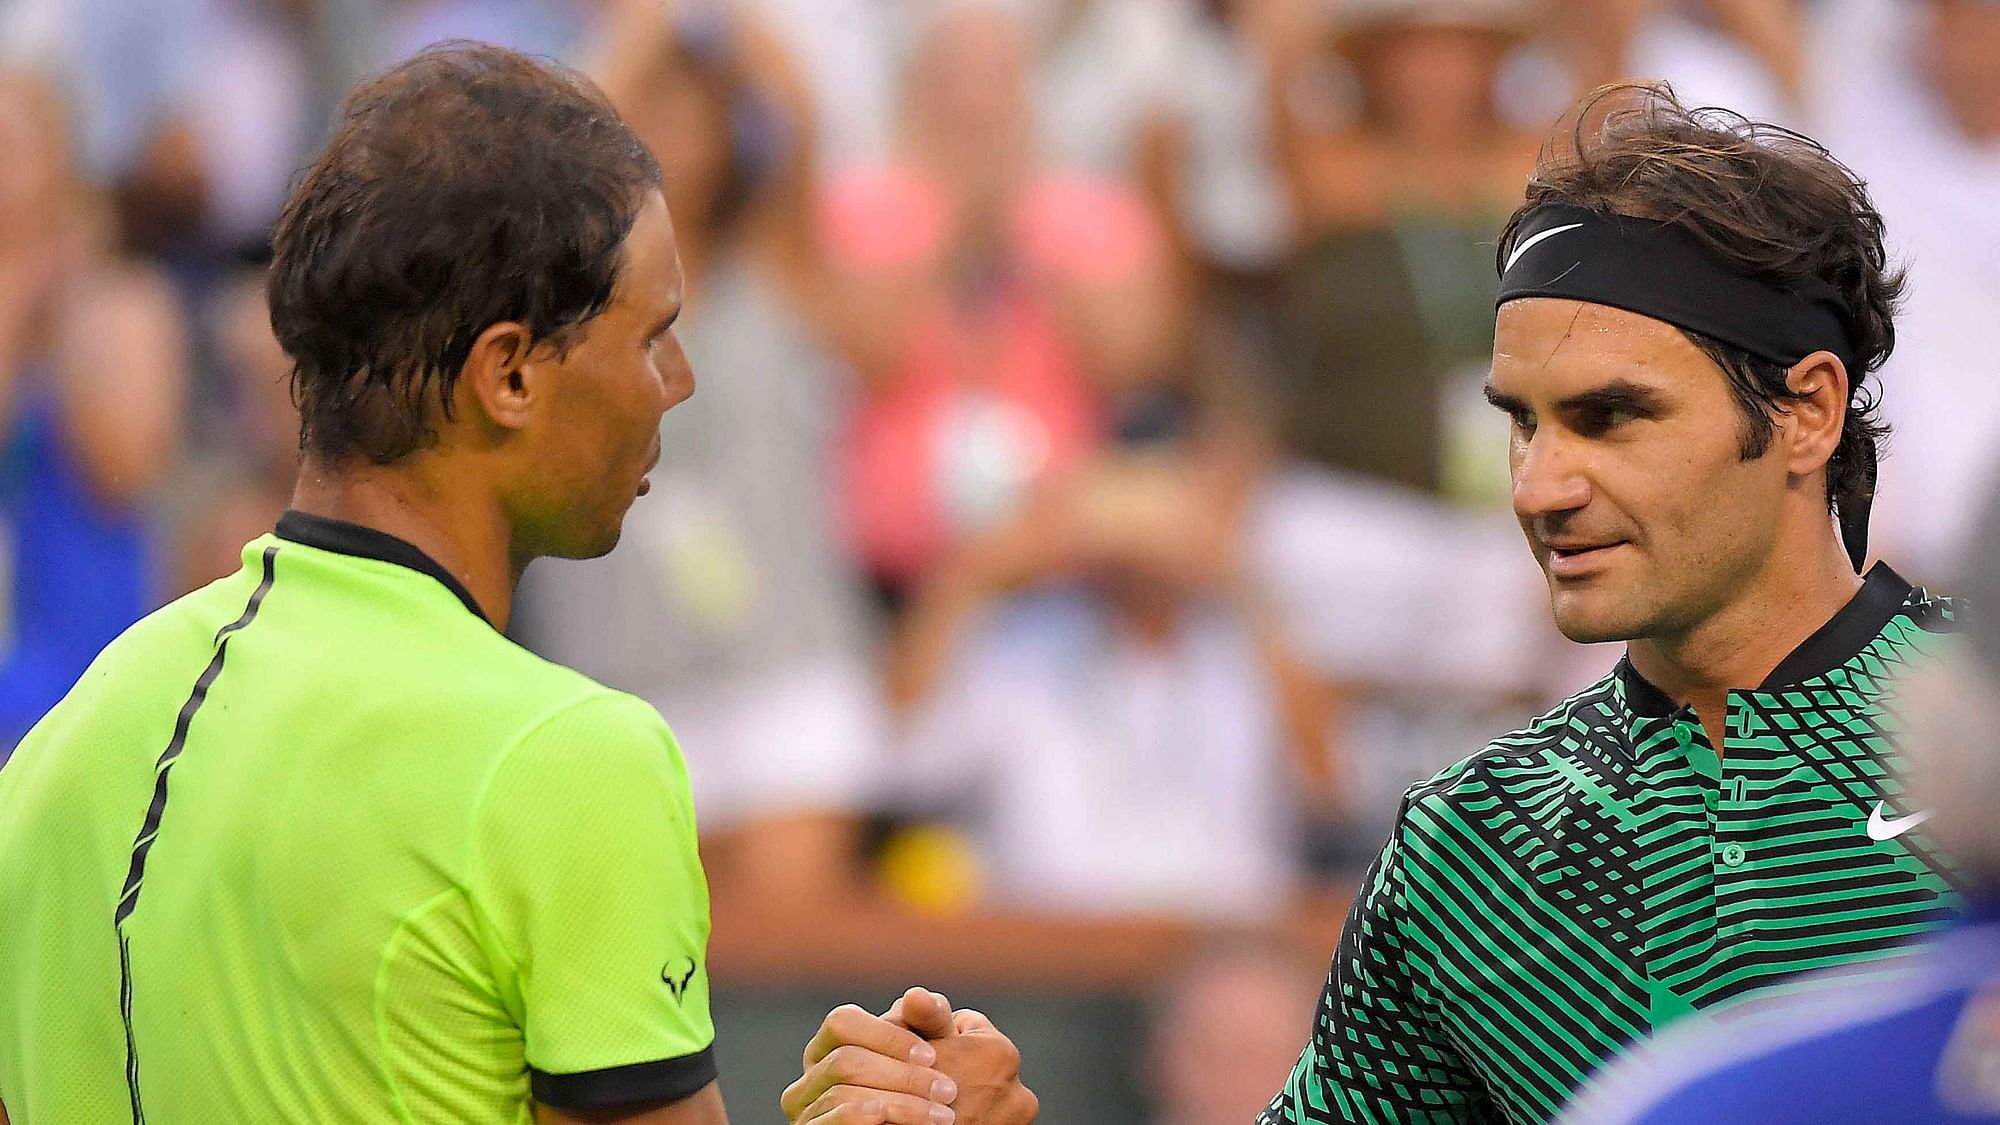 File photo of Rafael Nadal (L) and Roger Federer (R).